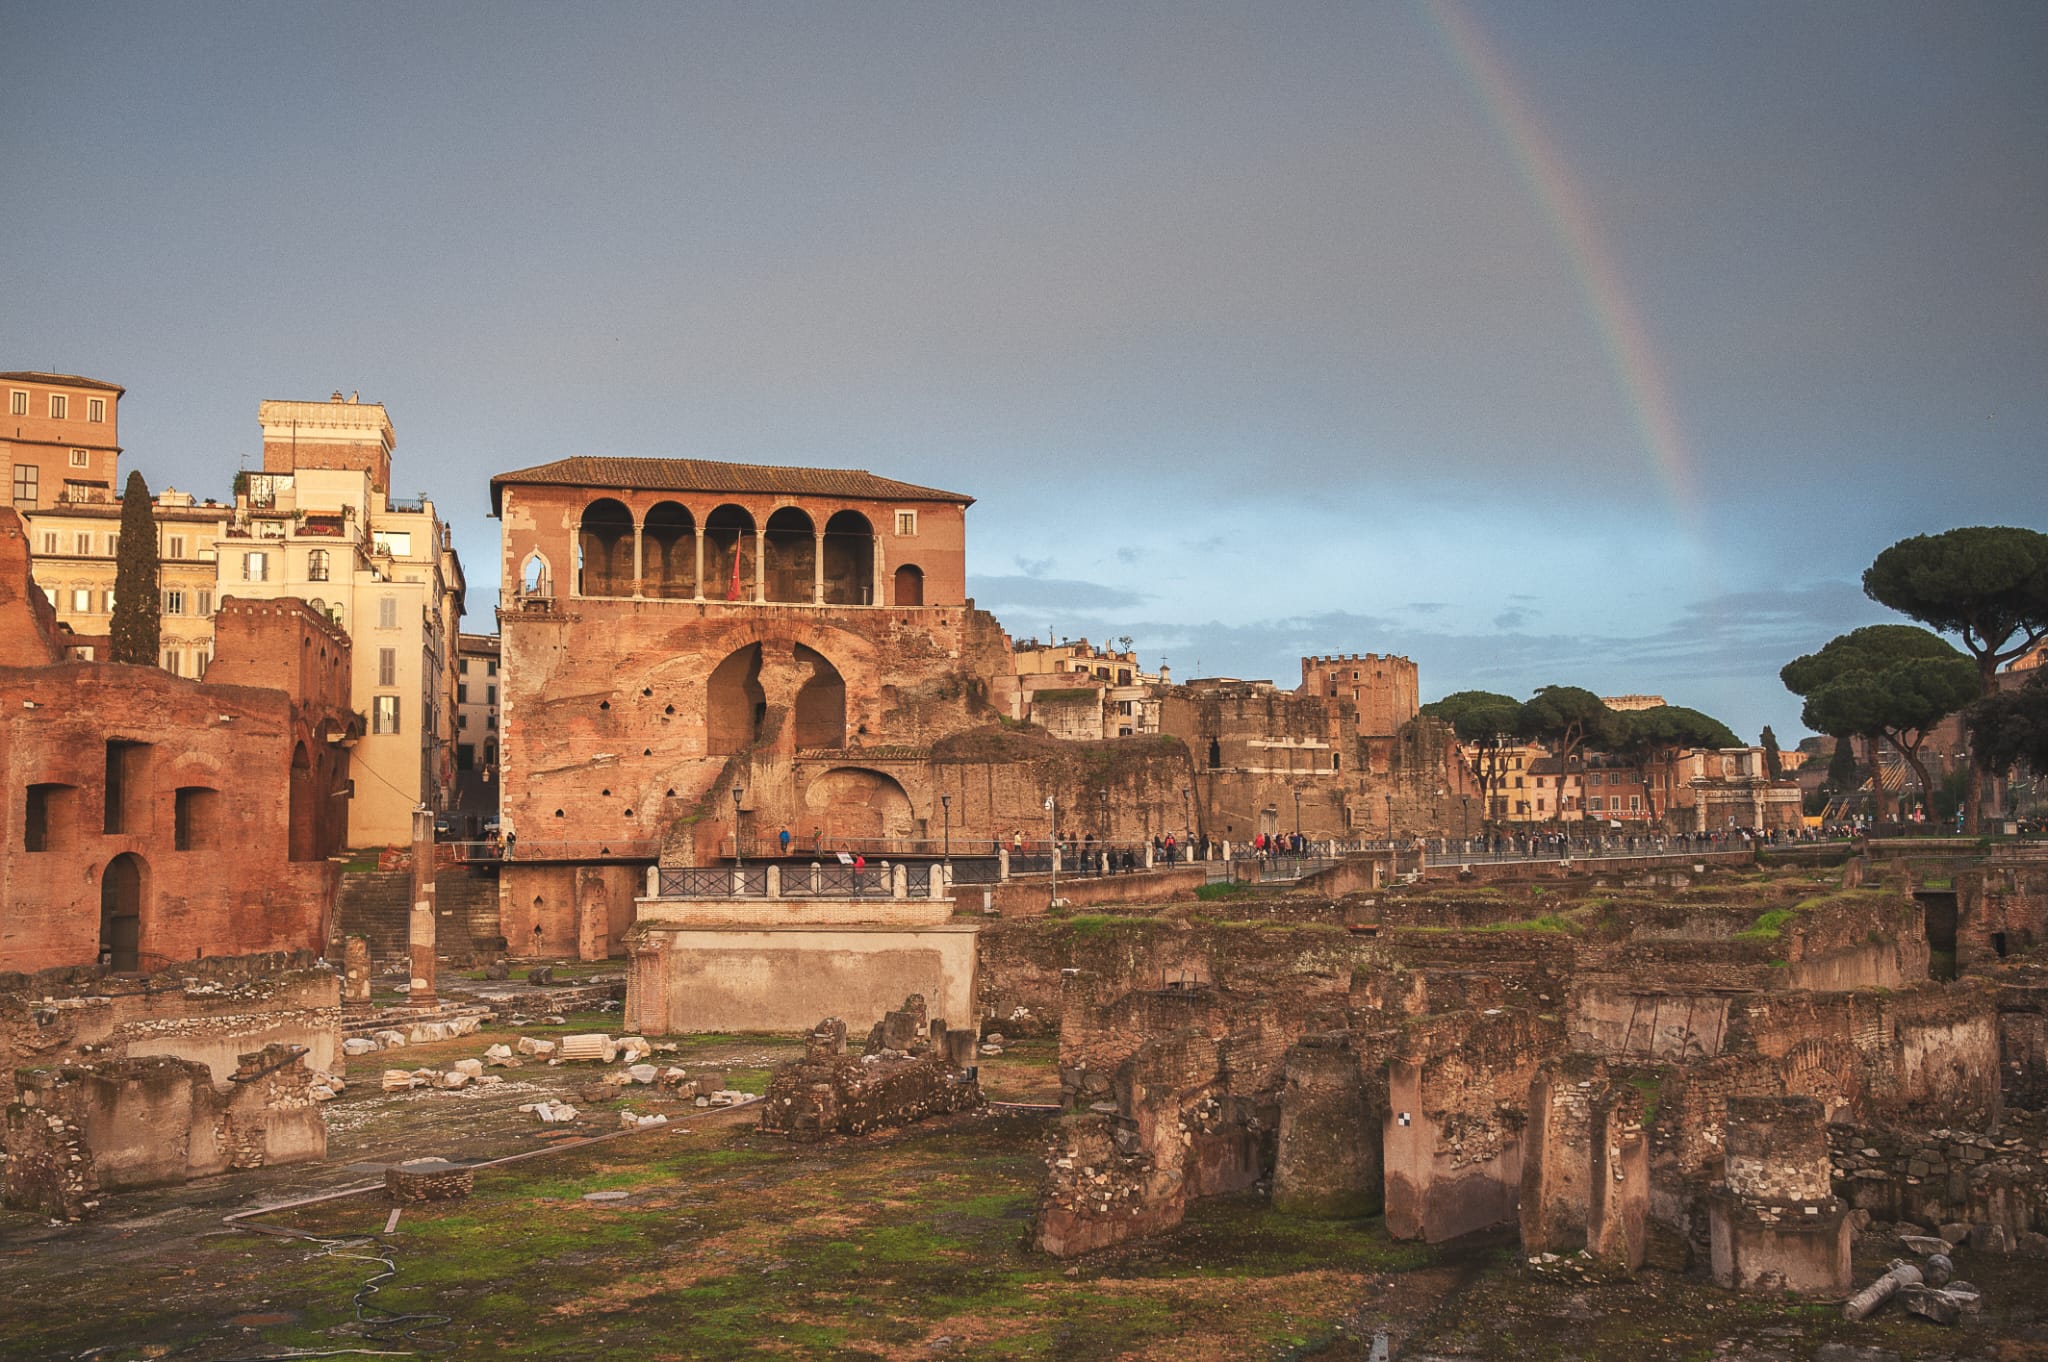 Rome under the rainbow...